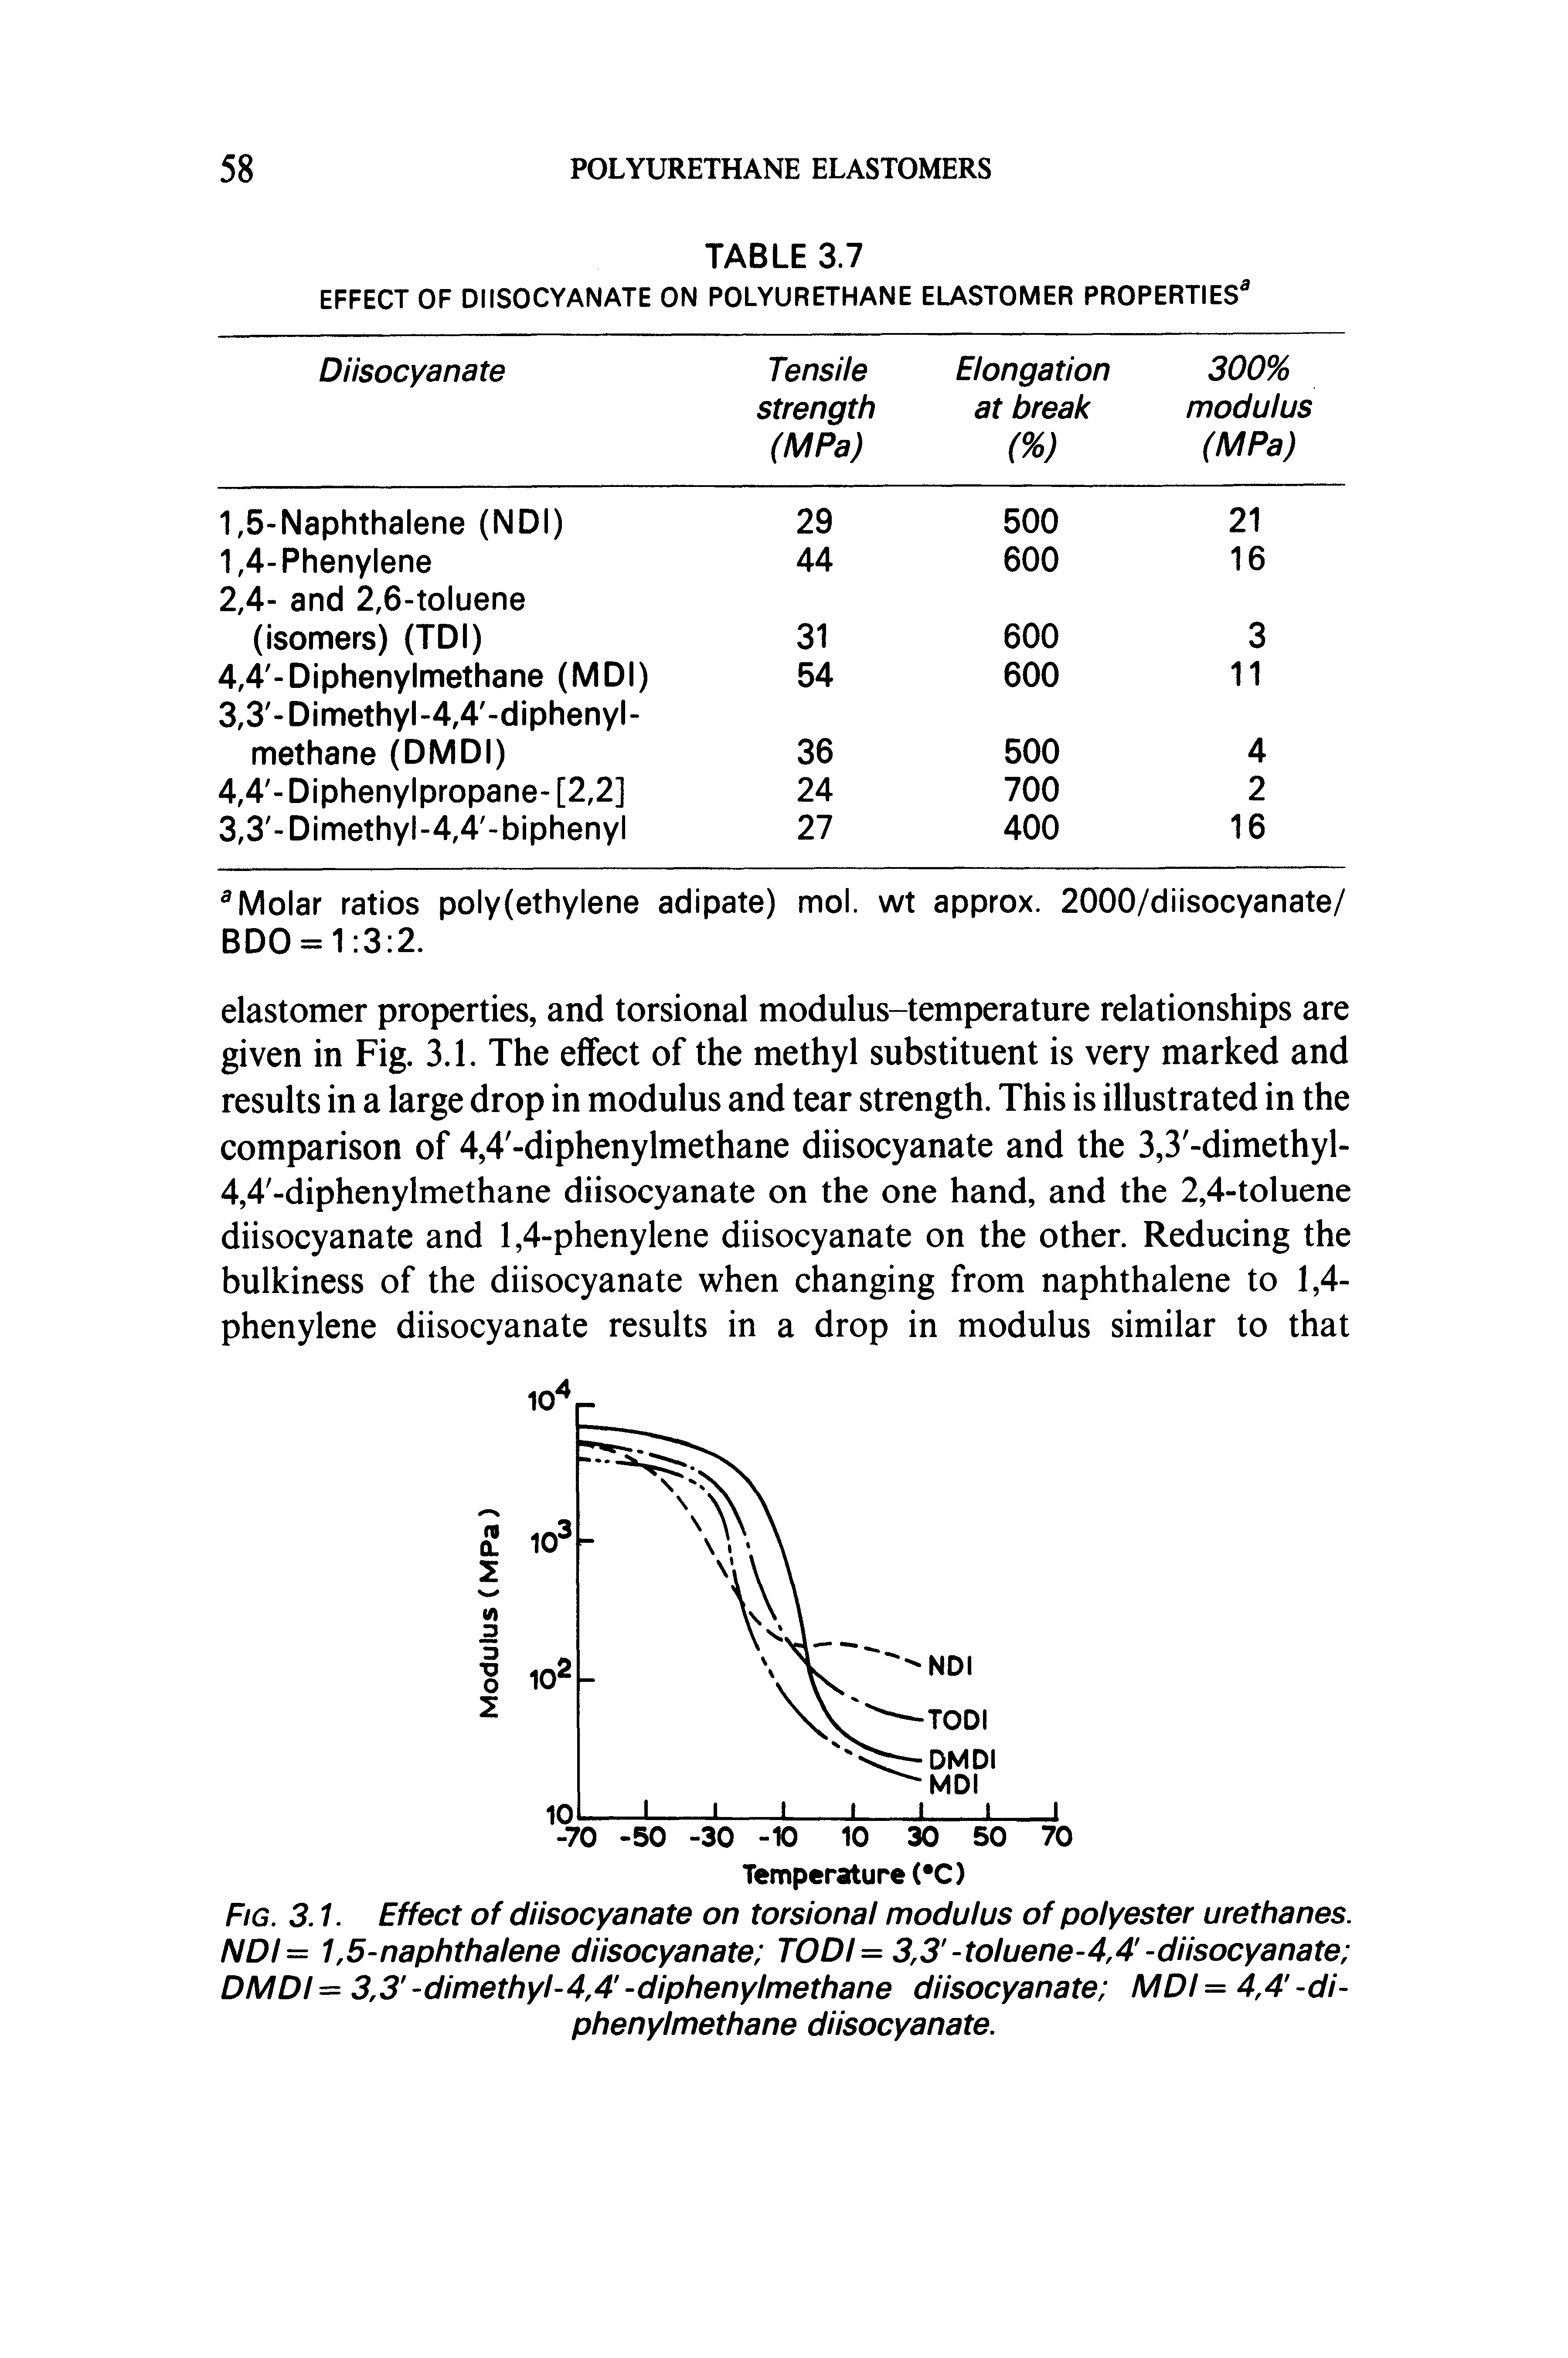 Fig. 3.1. Effect of diisocyanate on torsional modulus of polyester urethanes. NDI= 1,5-naphthalene diisocyanate TOD = 3,3 -toluene-4,4-diisocyanate DMDI= 3,3 -dimethyl-4,4 -diphenylmethane diisocyanate MDI= 4,4 -di-phenylmethane diisocyanate.